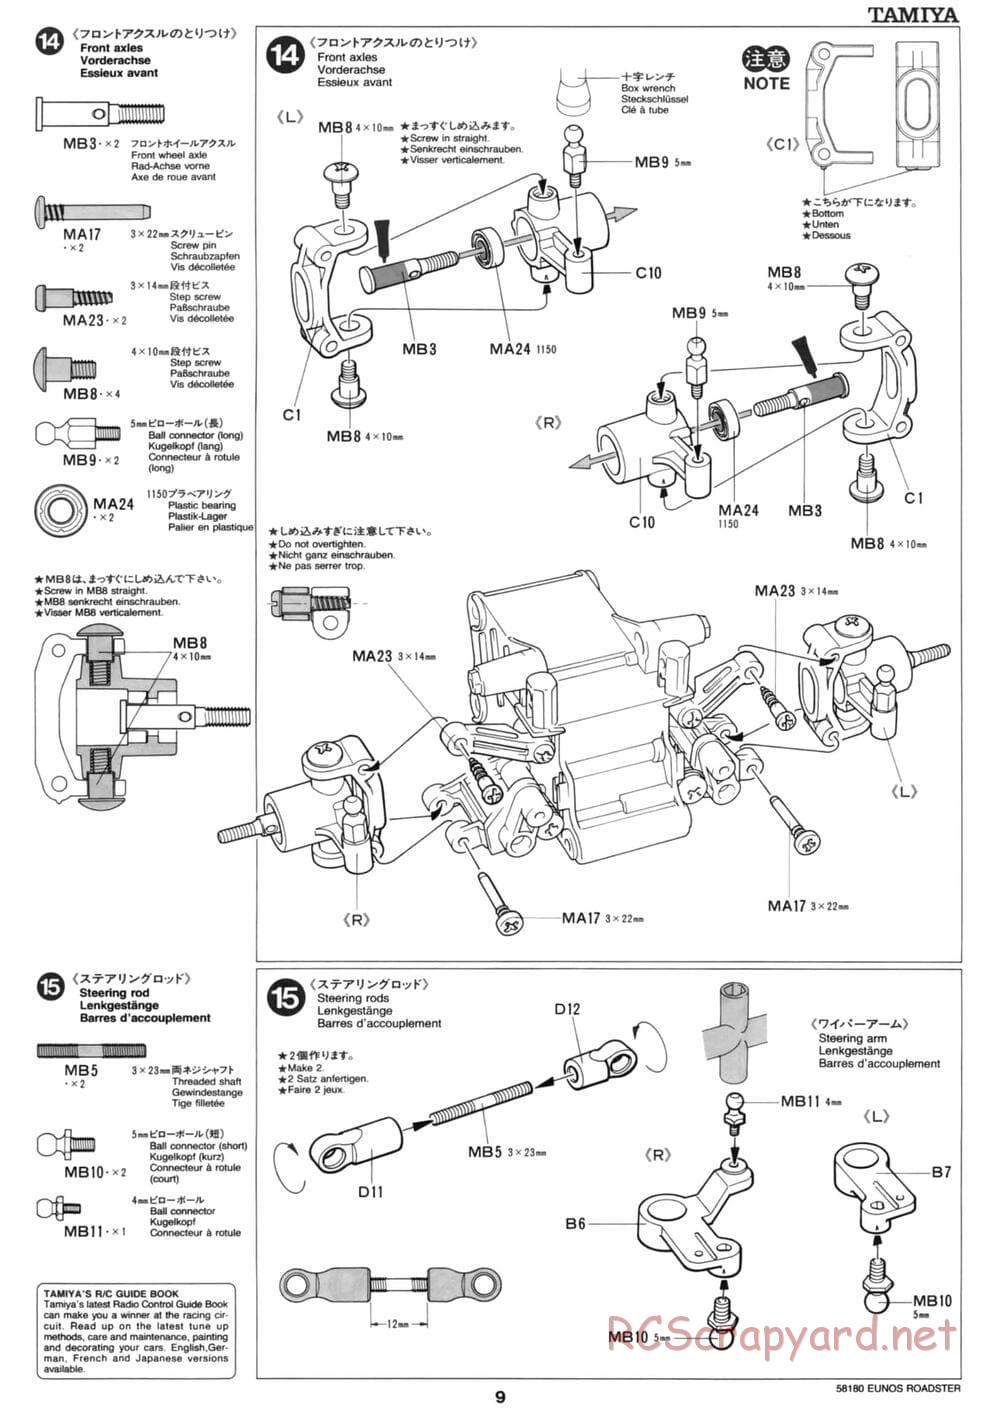 Tamiya - Eunos Roadster - M02M Chassis - Manual - Page 9